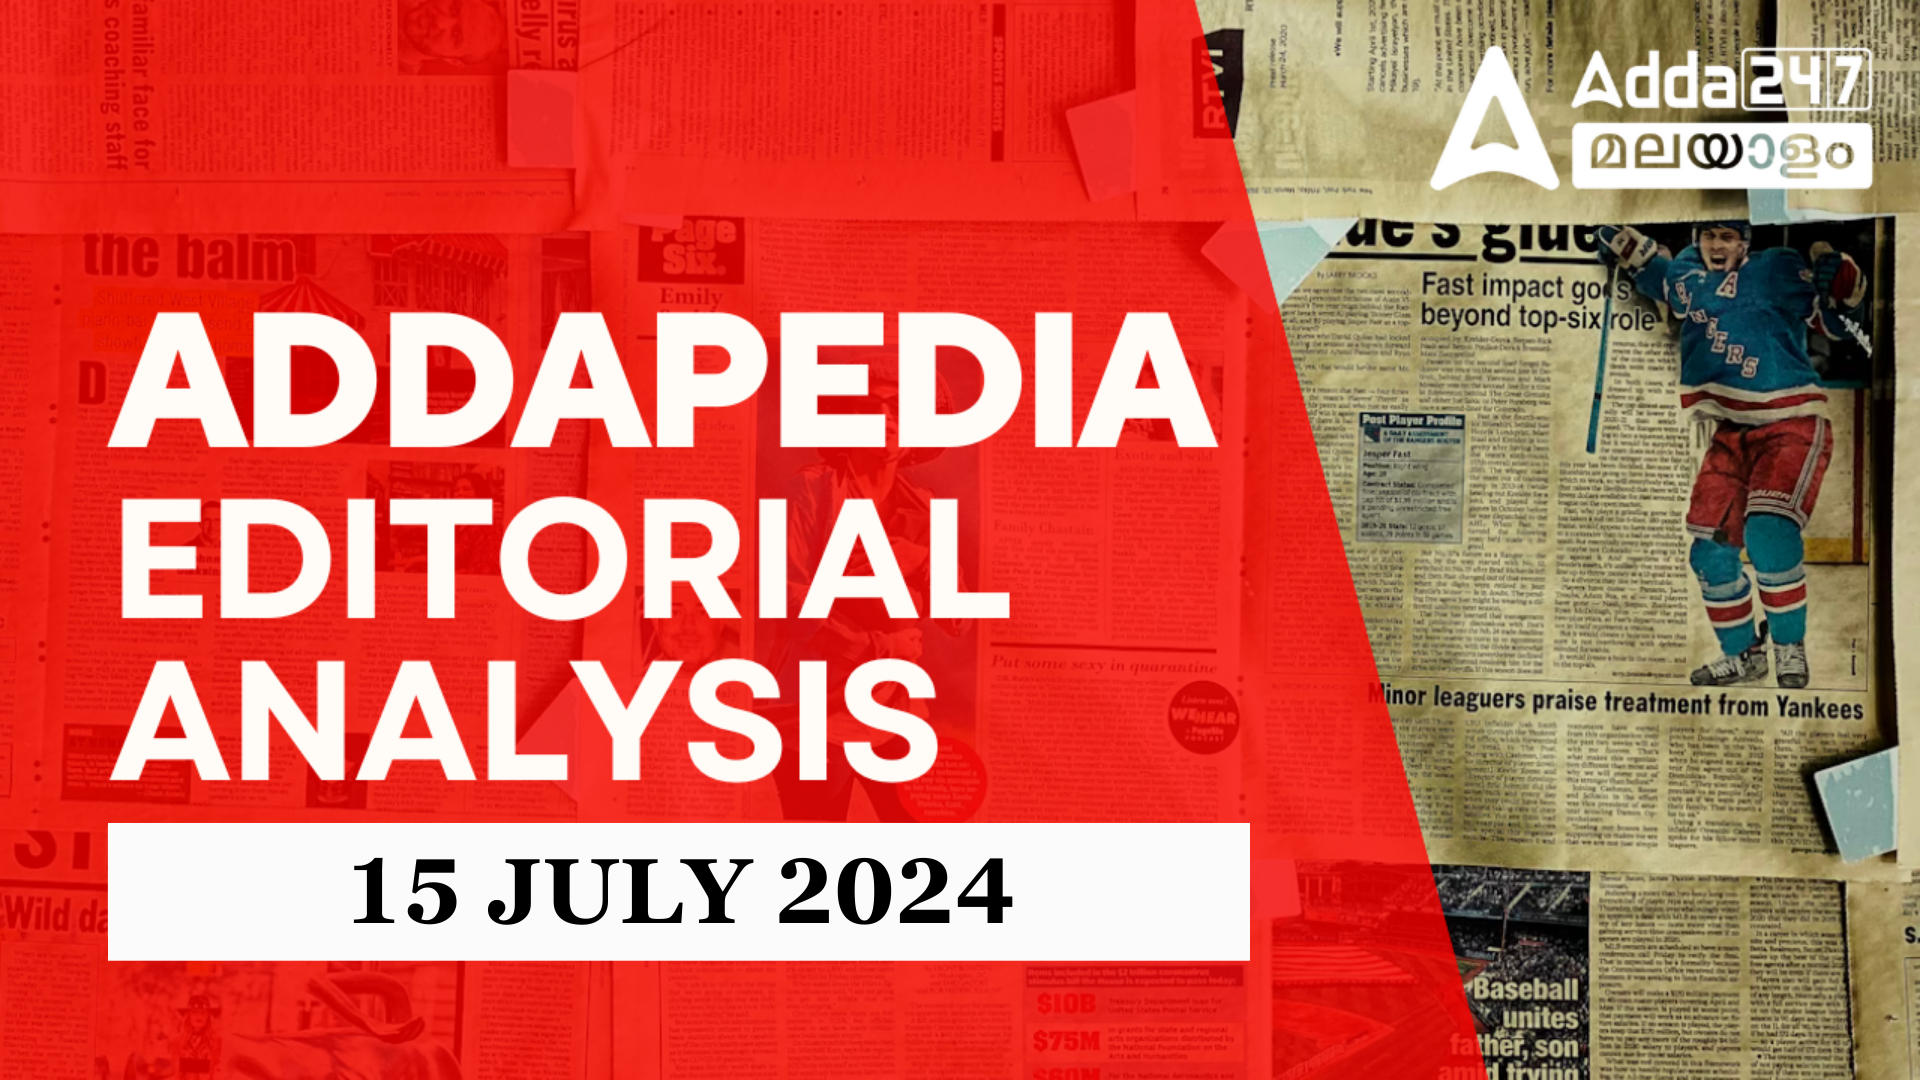 Addapedia Editorial Analysis: Daily News Editorial PDF, 15 July 2024